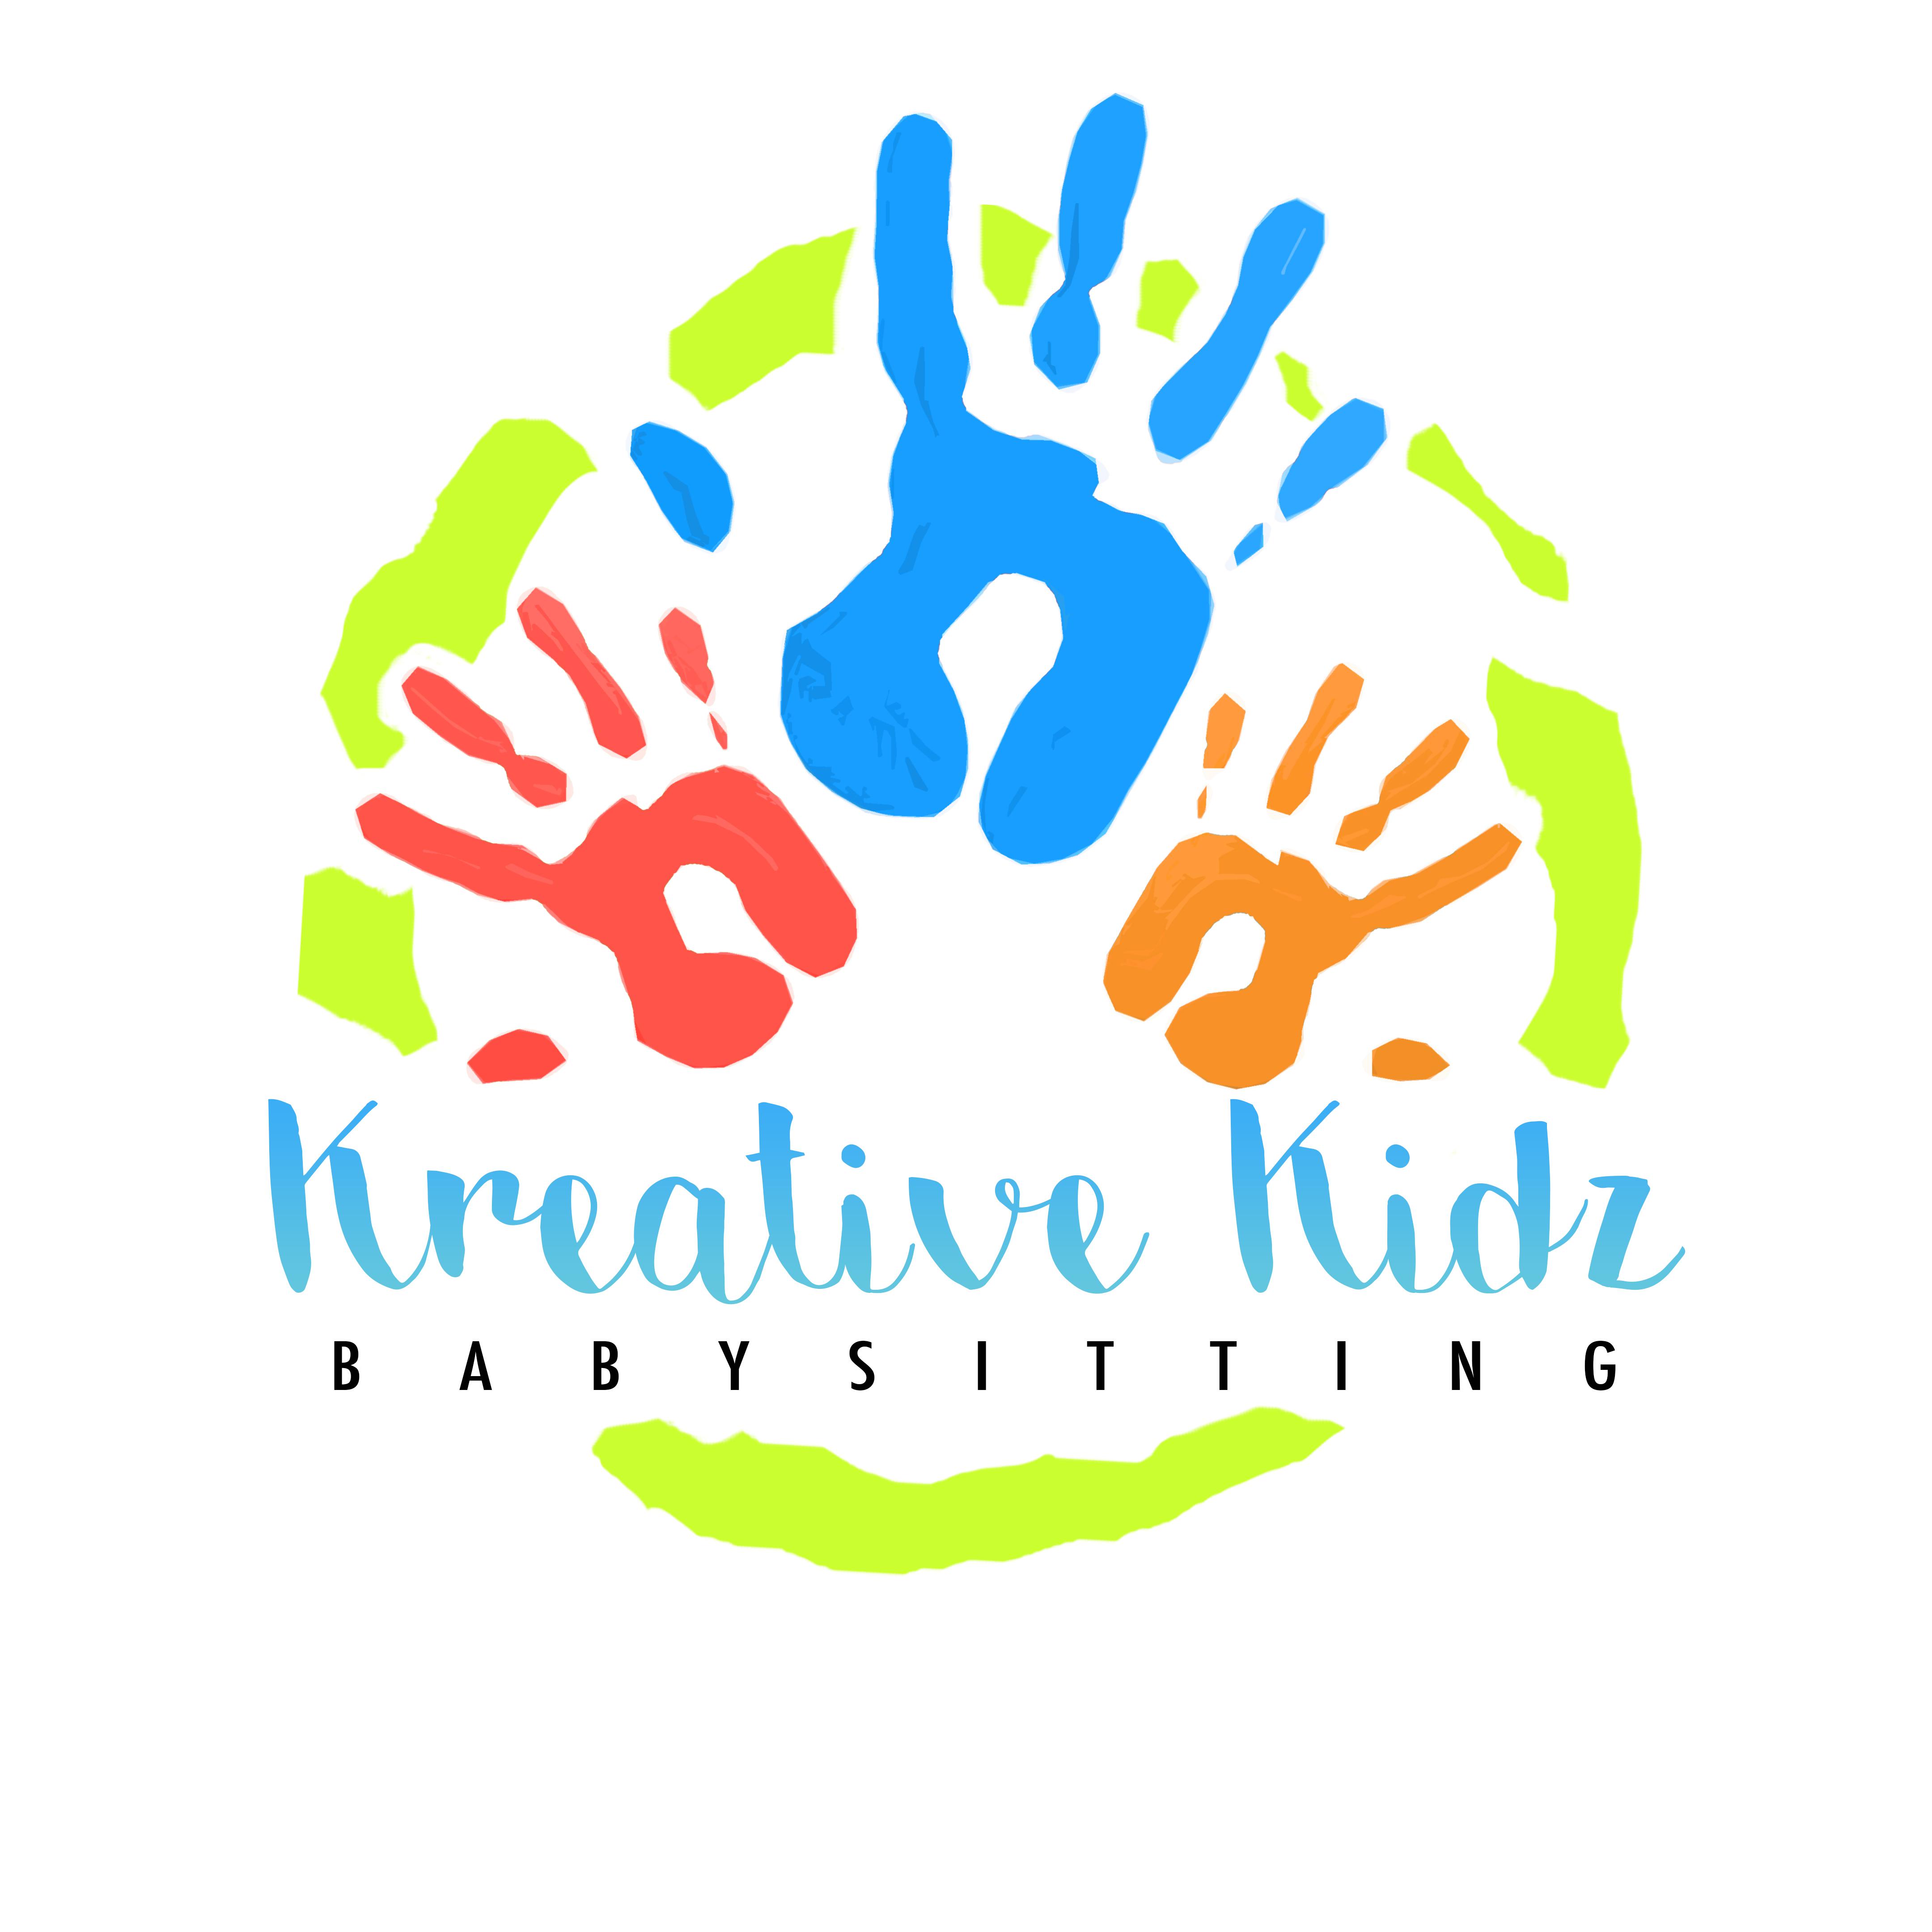 Kreative Kidz Babysitting Logo